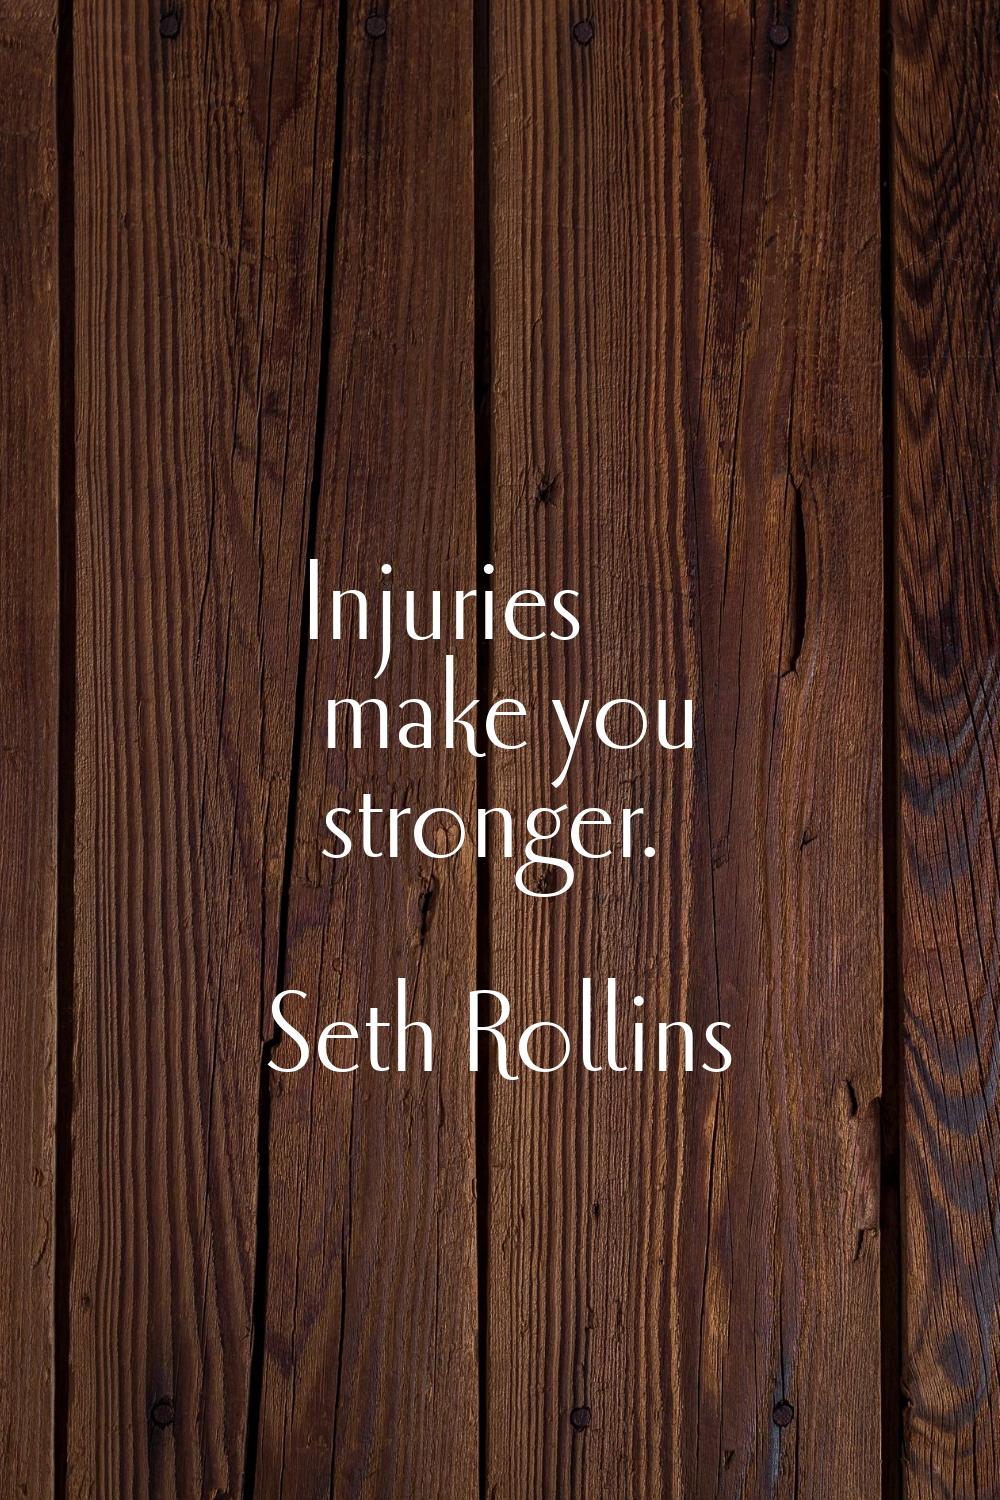 Injuries make you stronger.